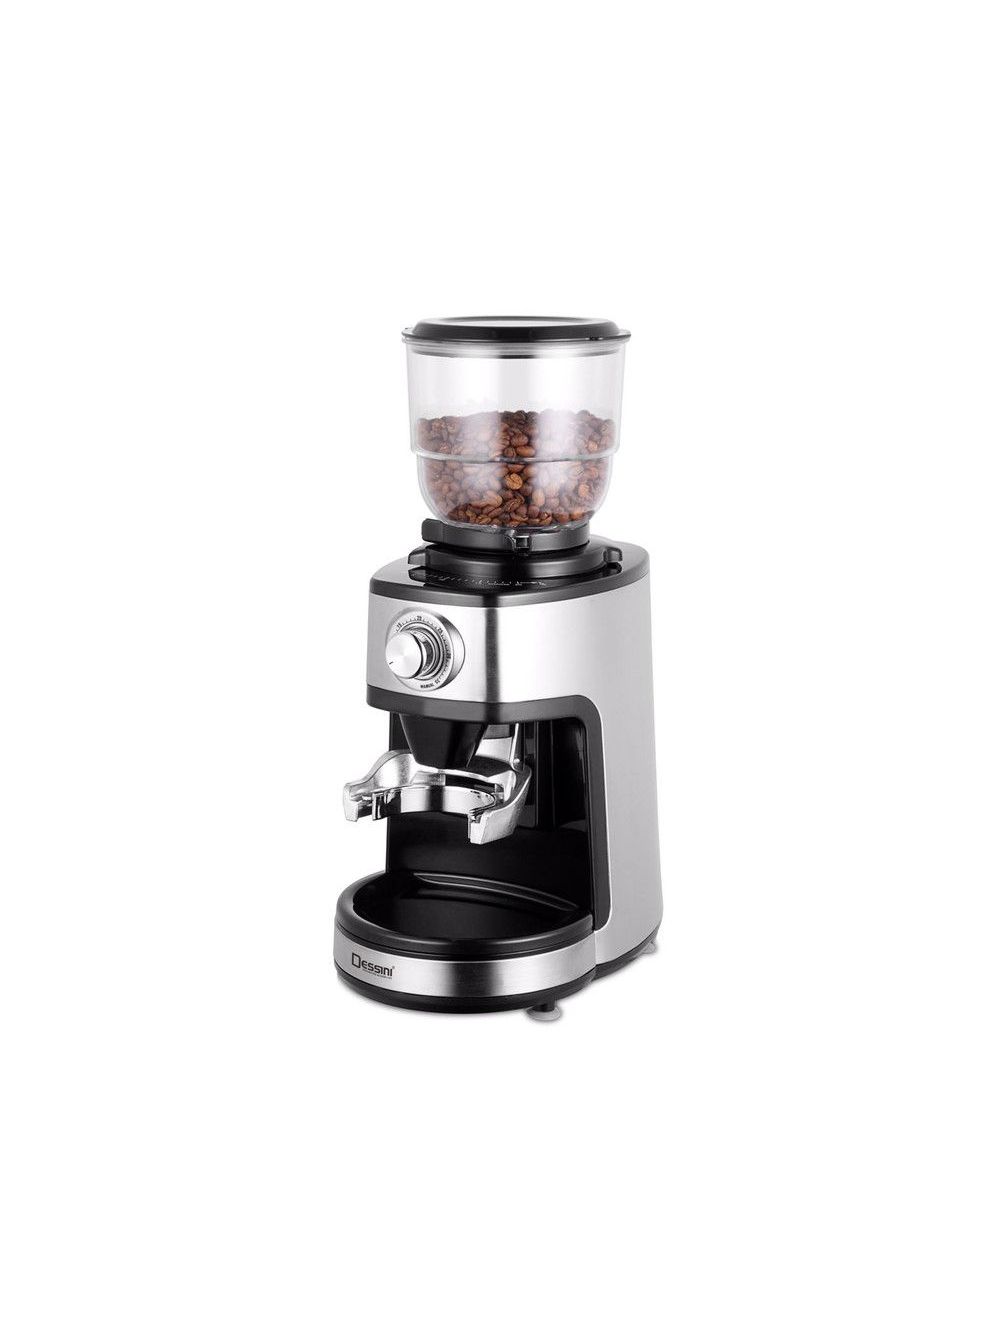 Dessini Electric Coffee Grinder 180 W -AKAT142